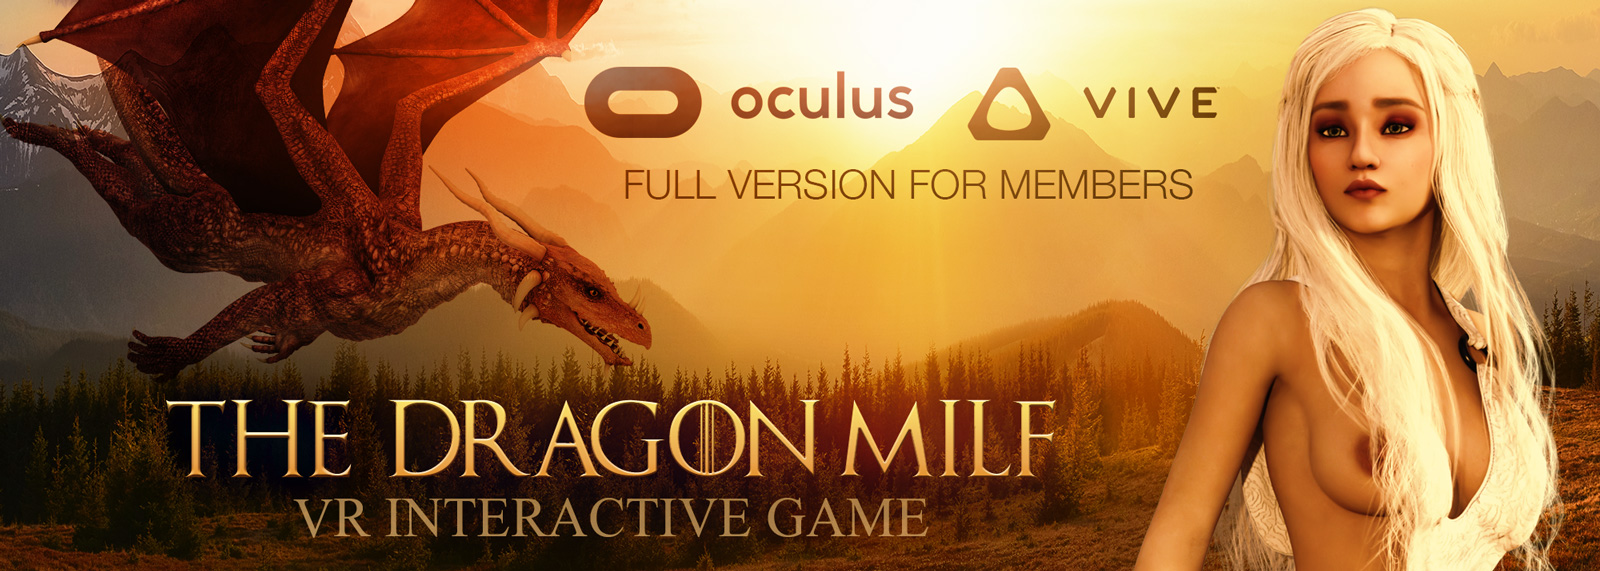 Dragon MILF Interactive VR Game